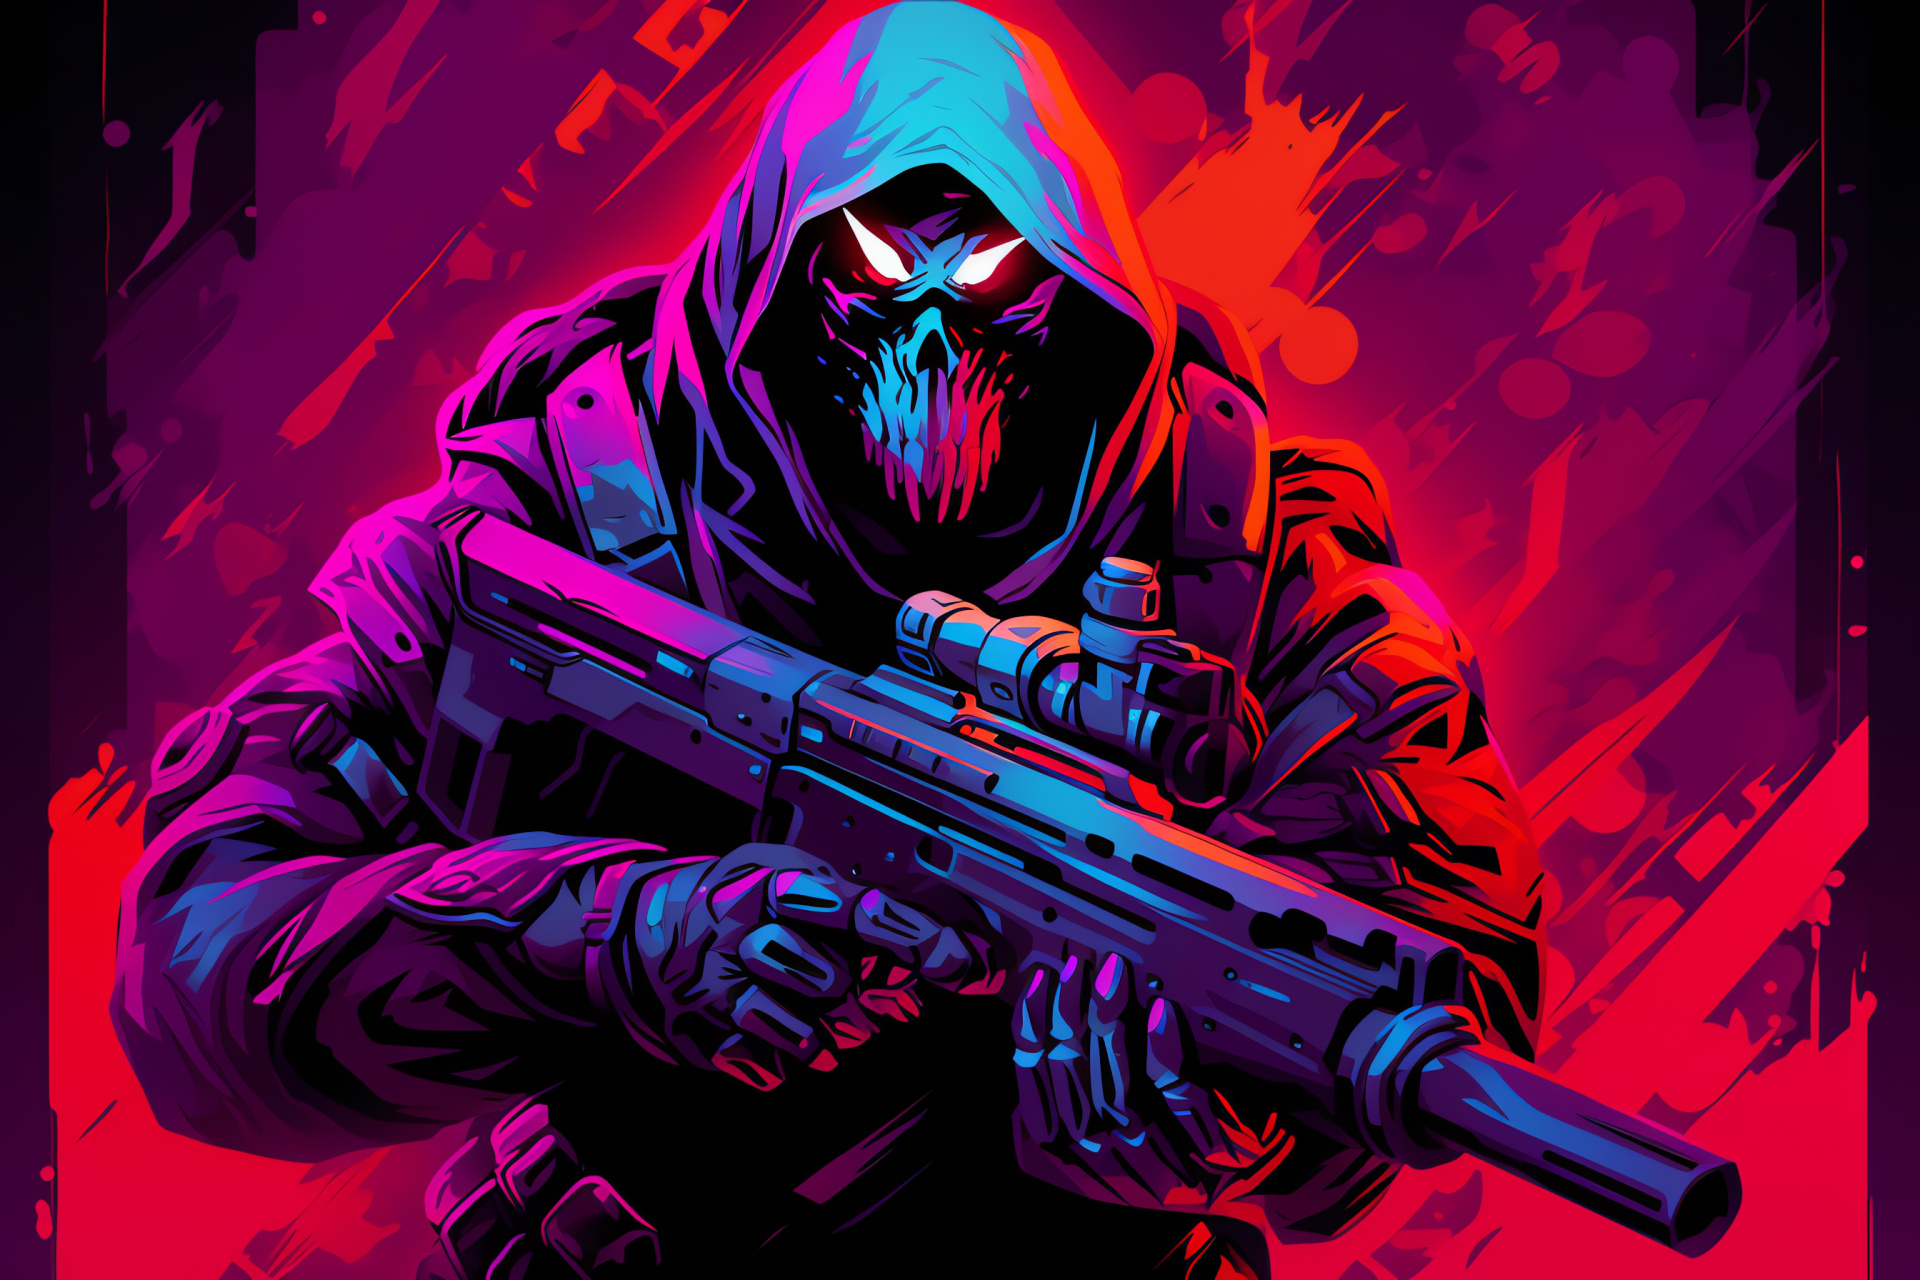 Overwatch Reaper persona, Cloaked figure, Game antagonist, Dark vigilante, Virtual mercenary, HD Desktop Image